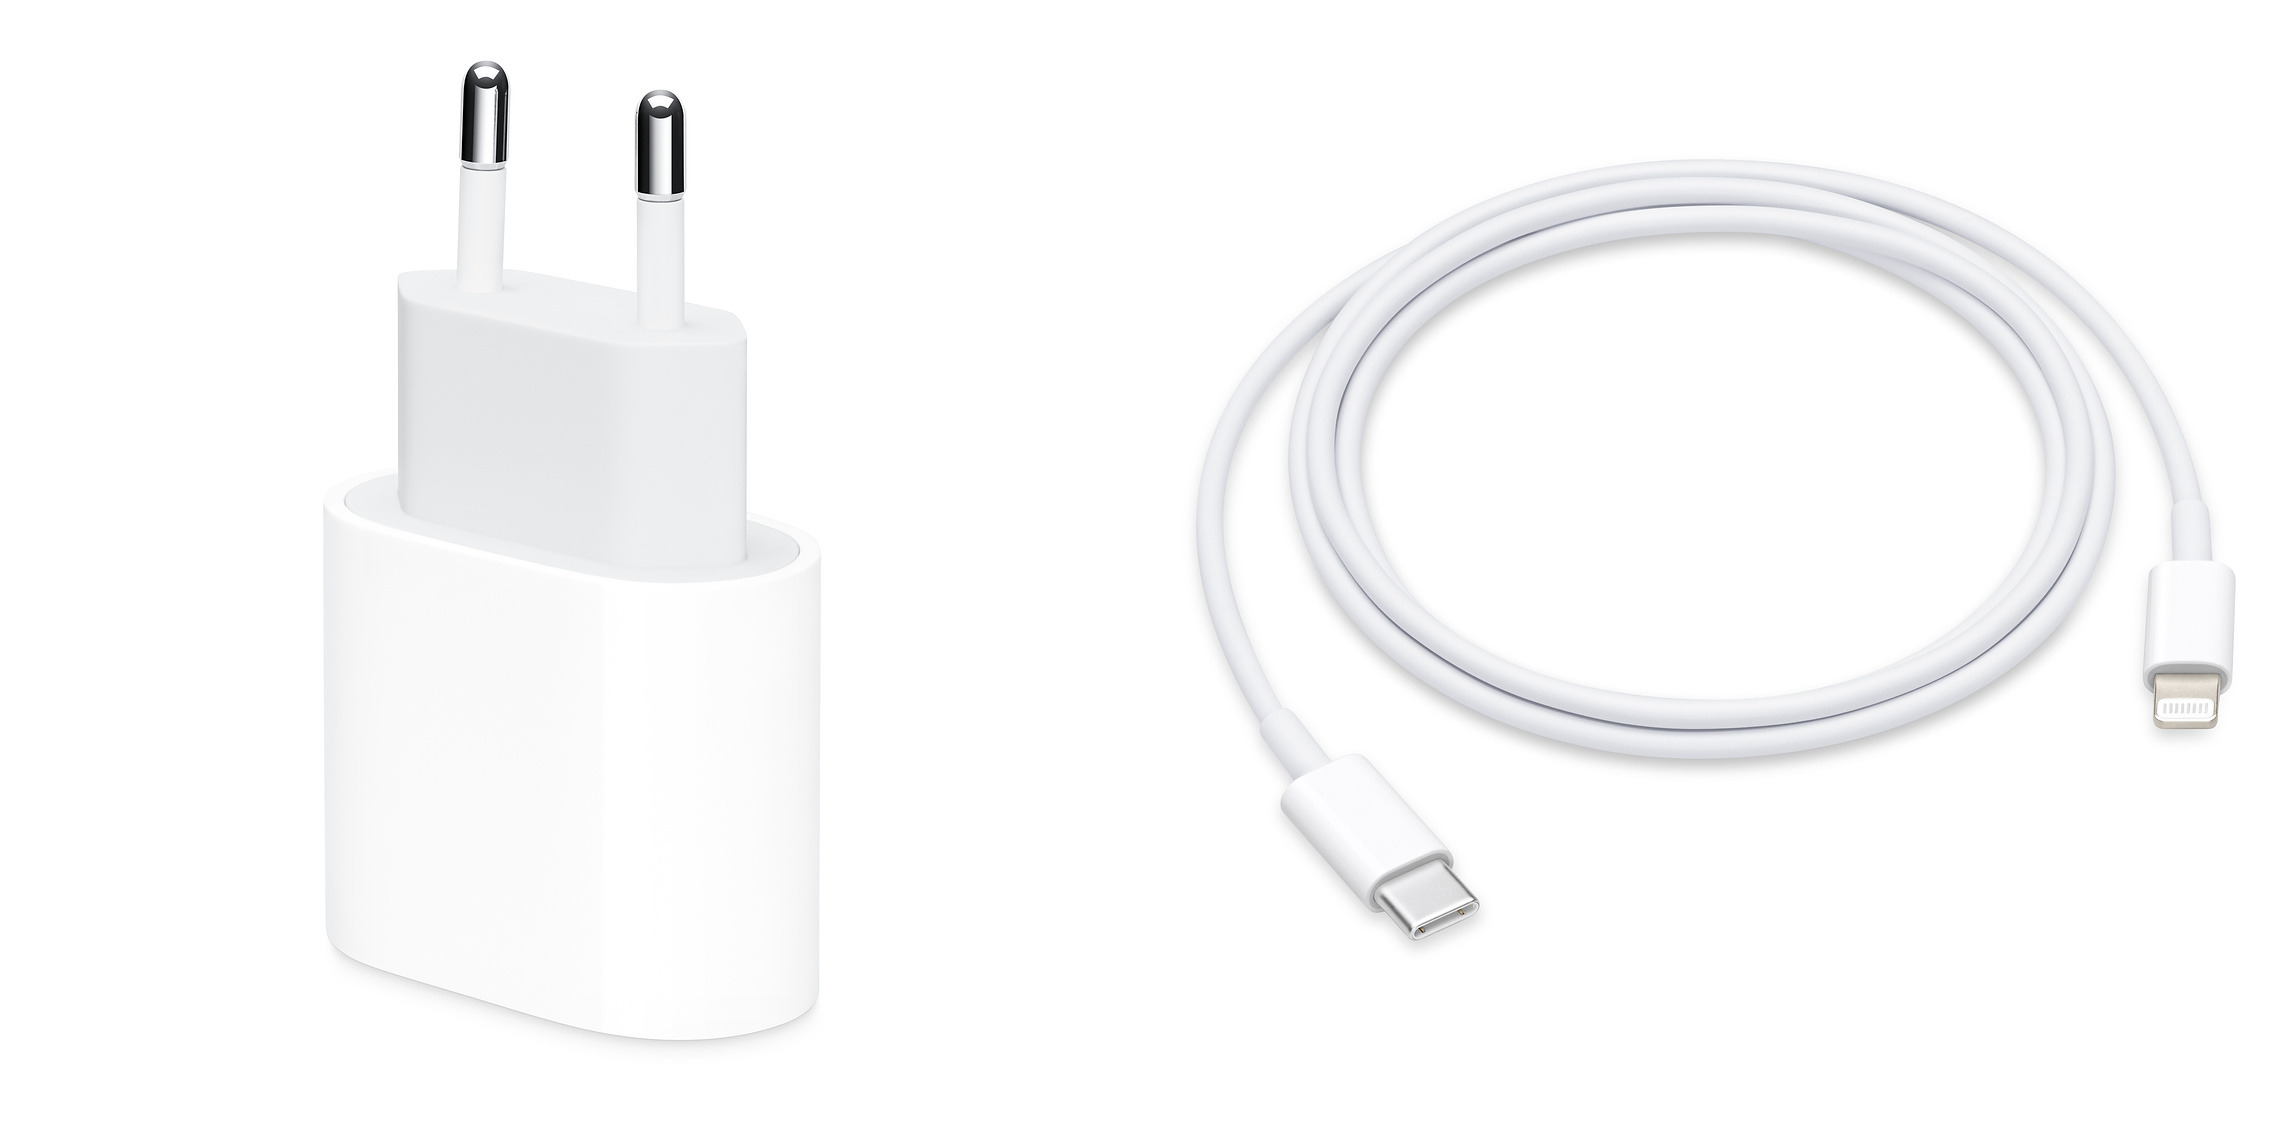 Зарядный адаптер usb c. Apple Adapter 20w USB-C. Зарядка iphone 18w. Apple 20w USB Power Adapter. Адаптер сетевой с кабелем [Apple] mhj83zm/a 20w 1usb-c + Type-c-Lightning (White).